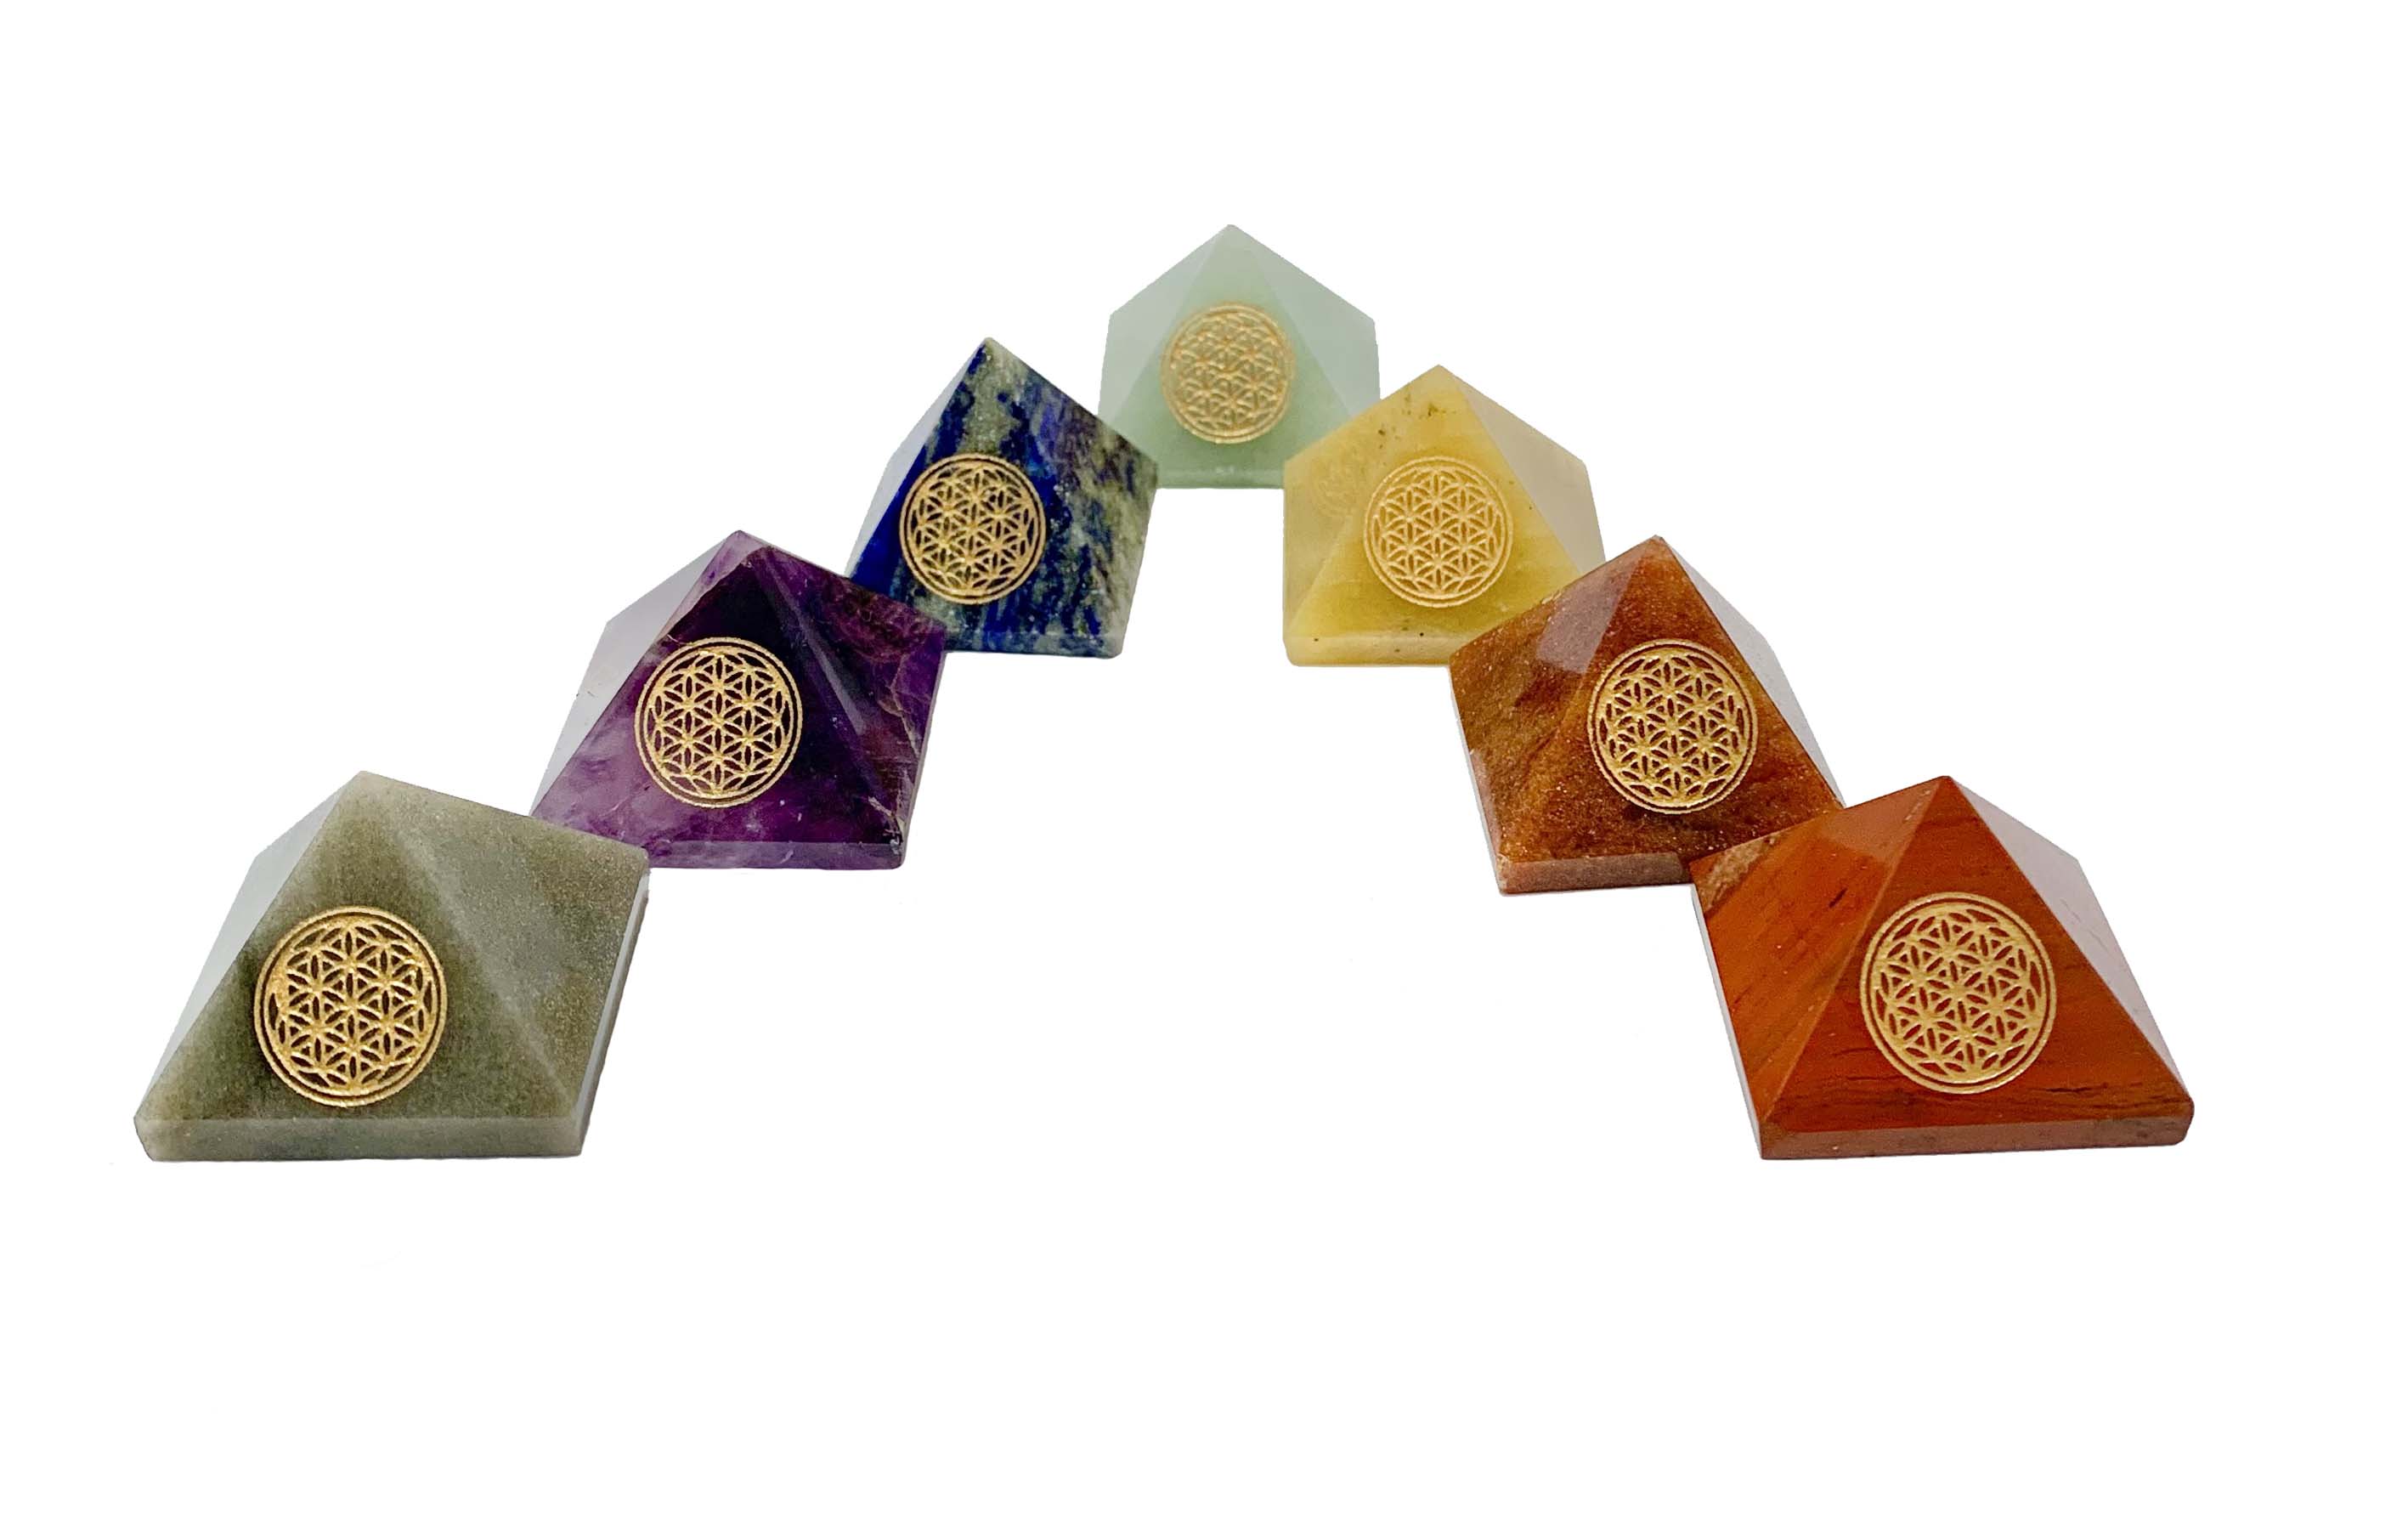 7 Chakras Flower of Life Crystal Pyramid Set